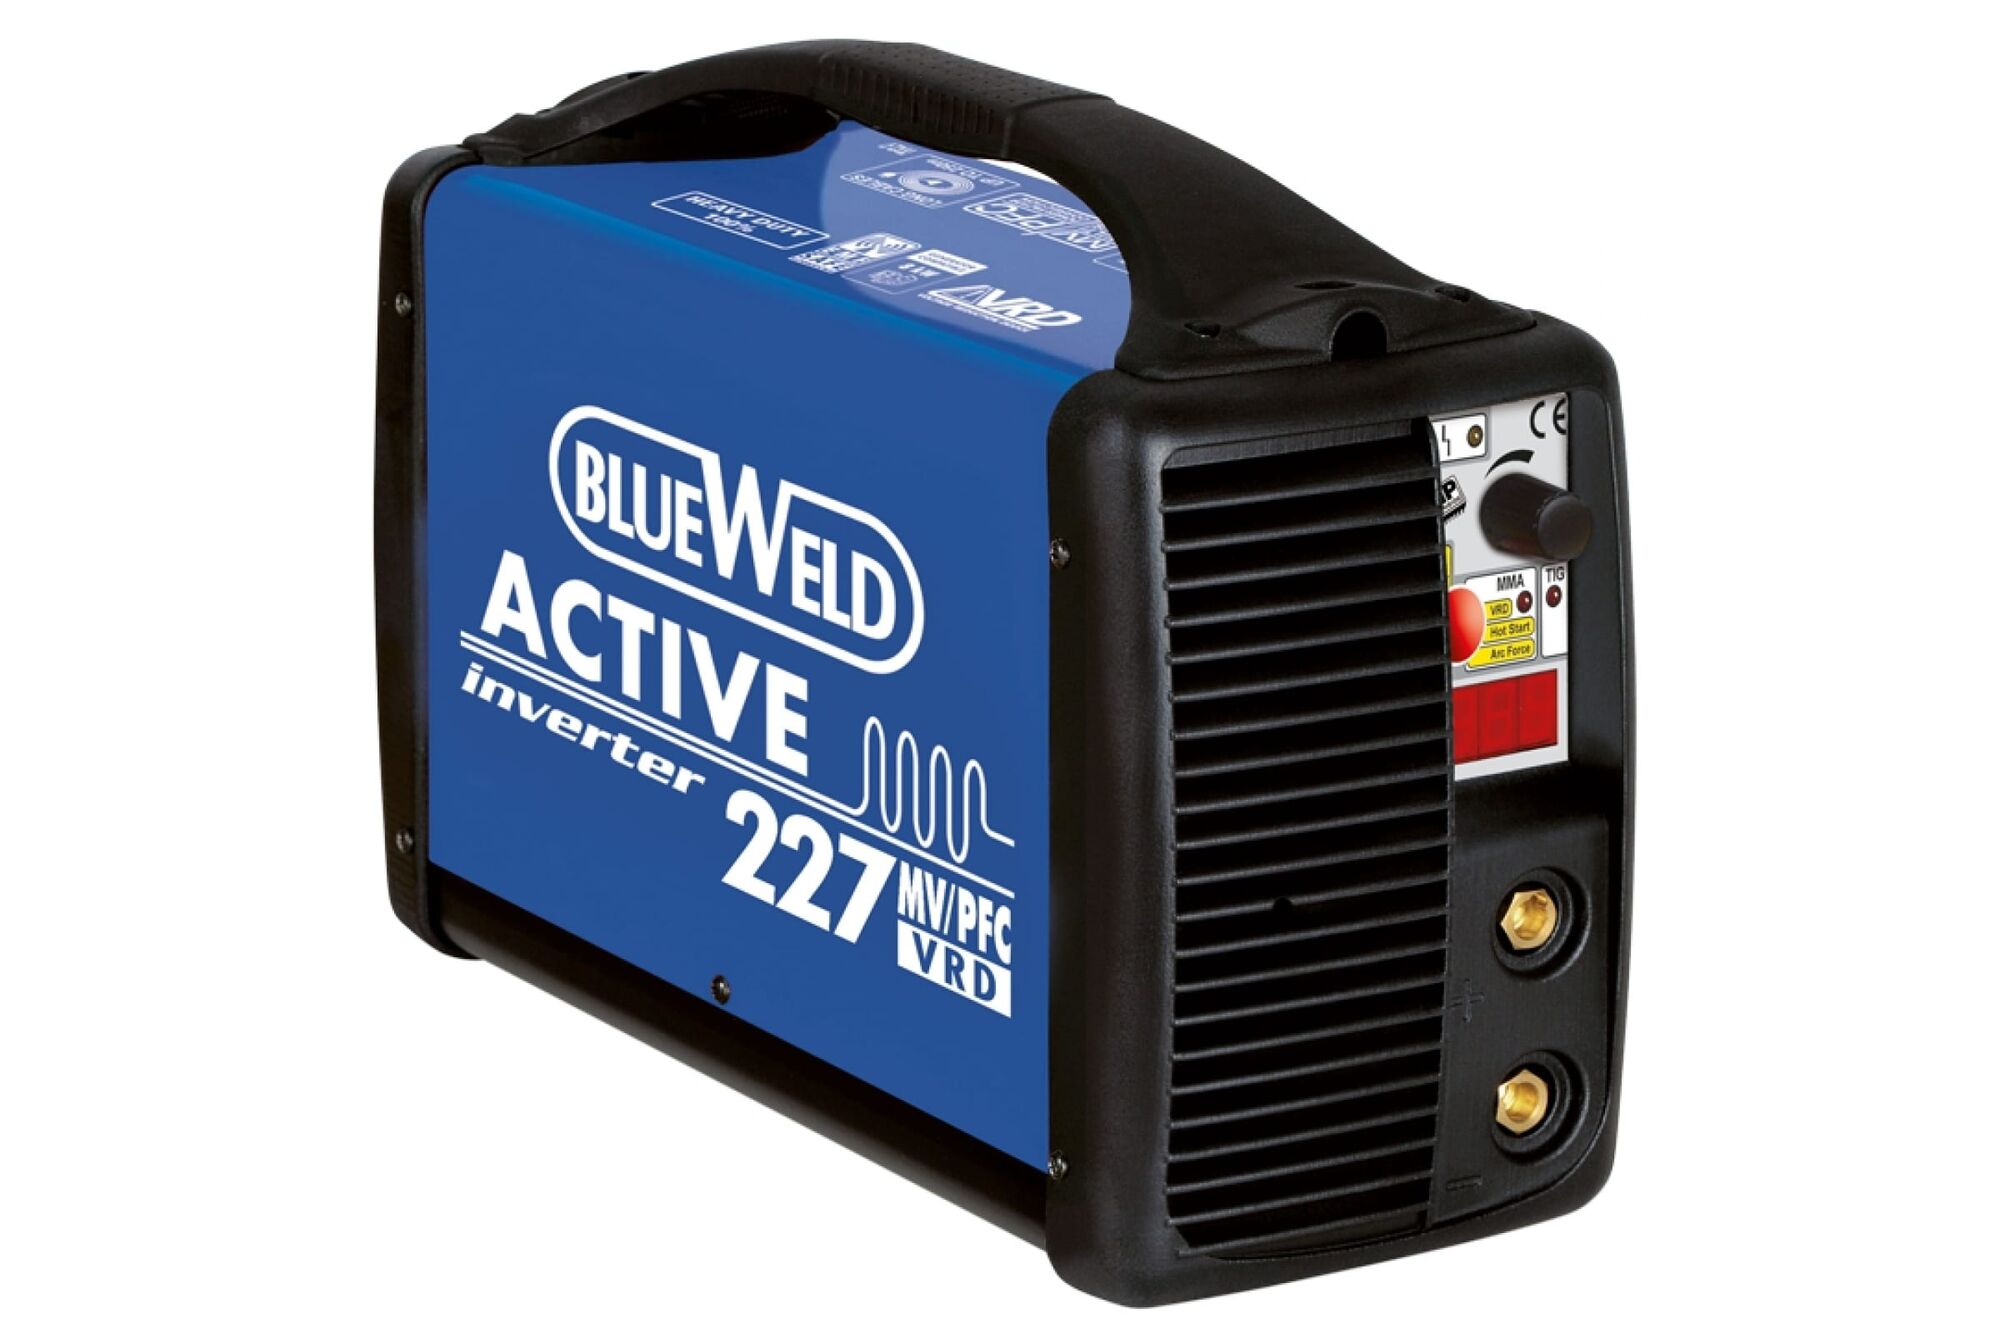 Инвертор BlueWeld ACTIVE Tig 227 MV/PFC DC-LIFT VRD 852120 Blue Weld